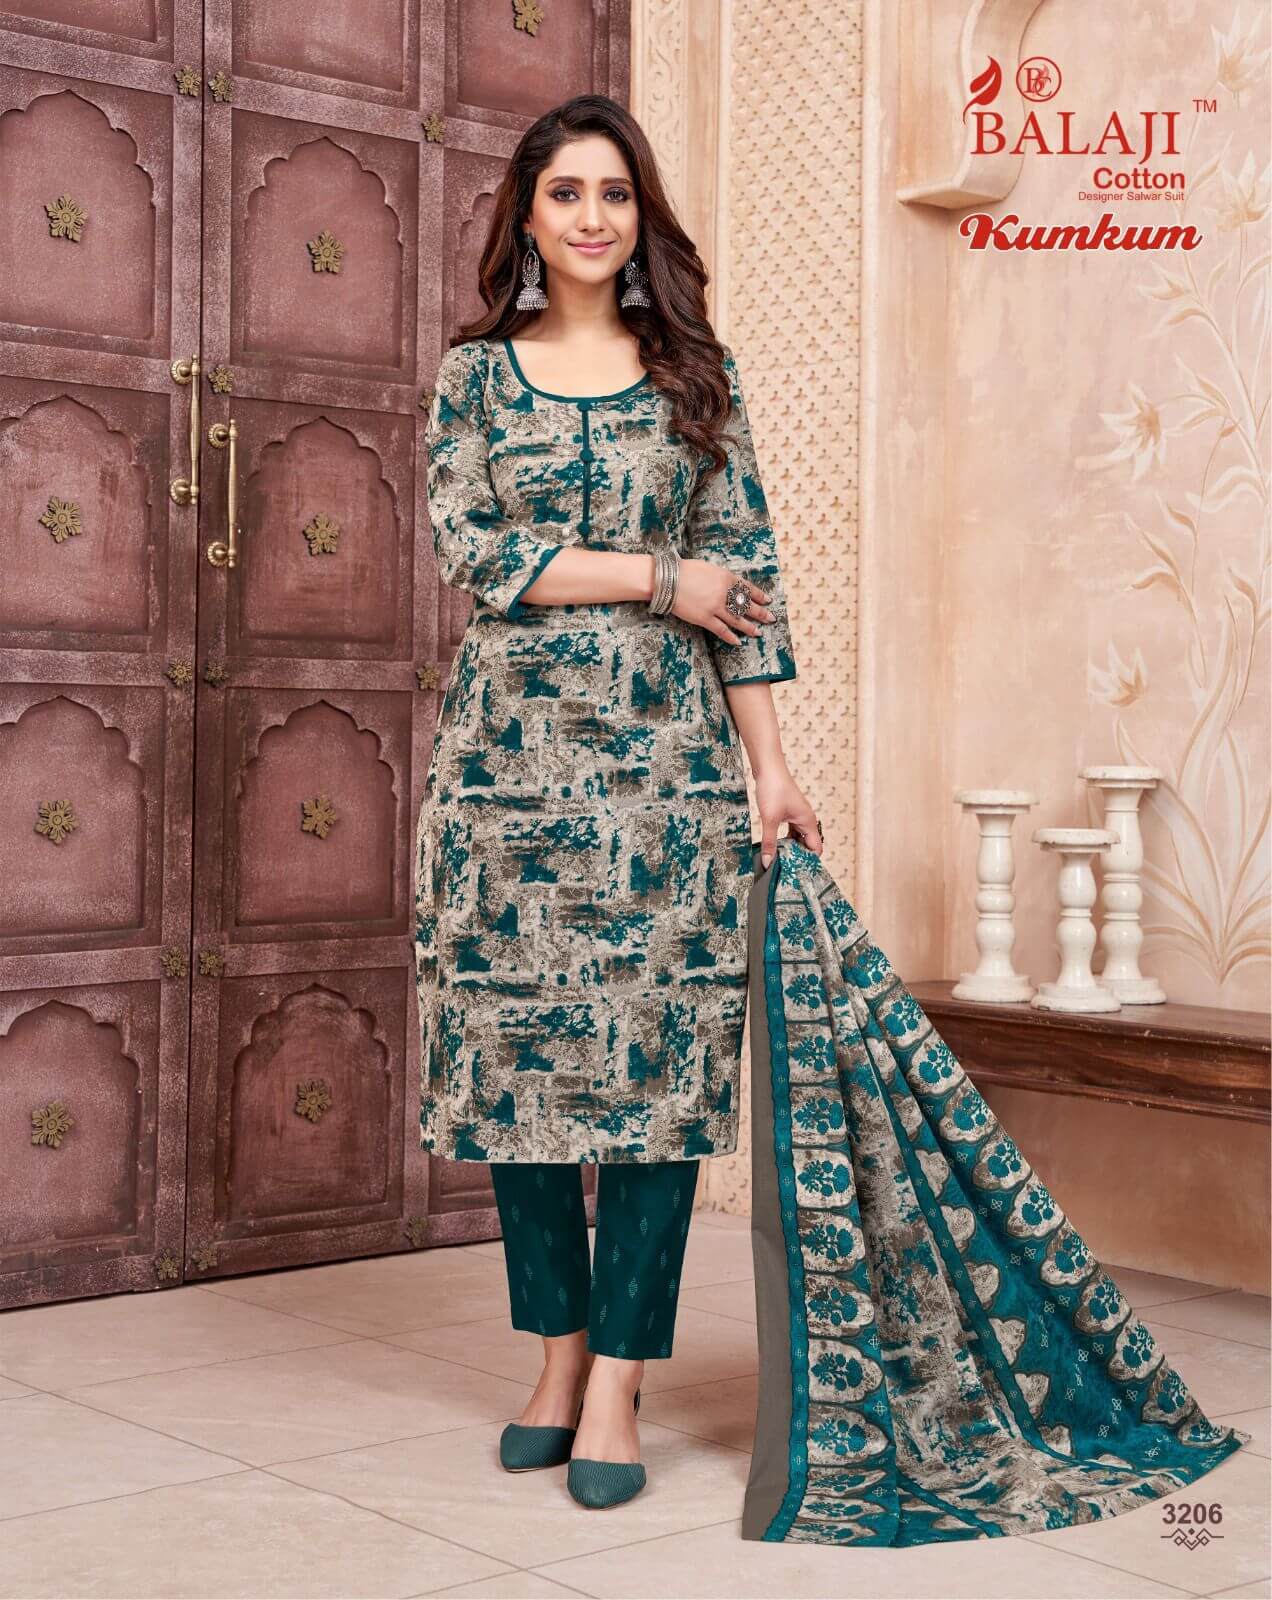 Balaji Cotton Kumkum Vol 32 Readymade Dress Catalog collection 18